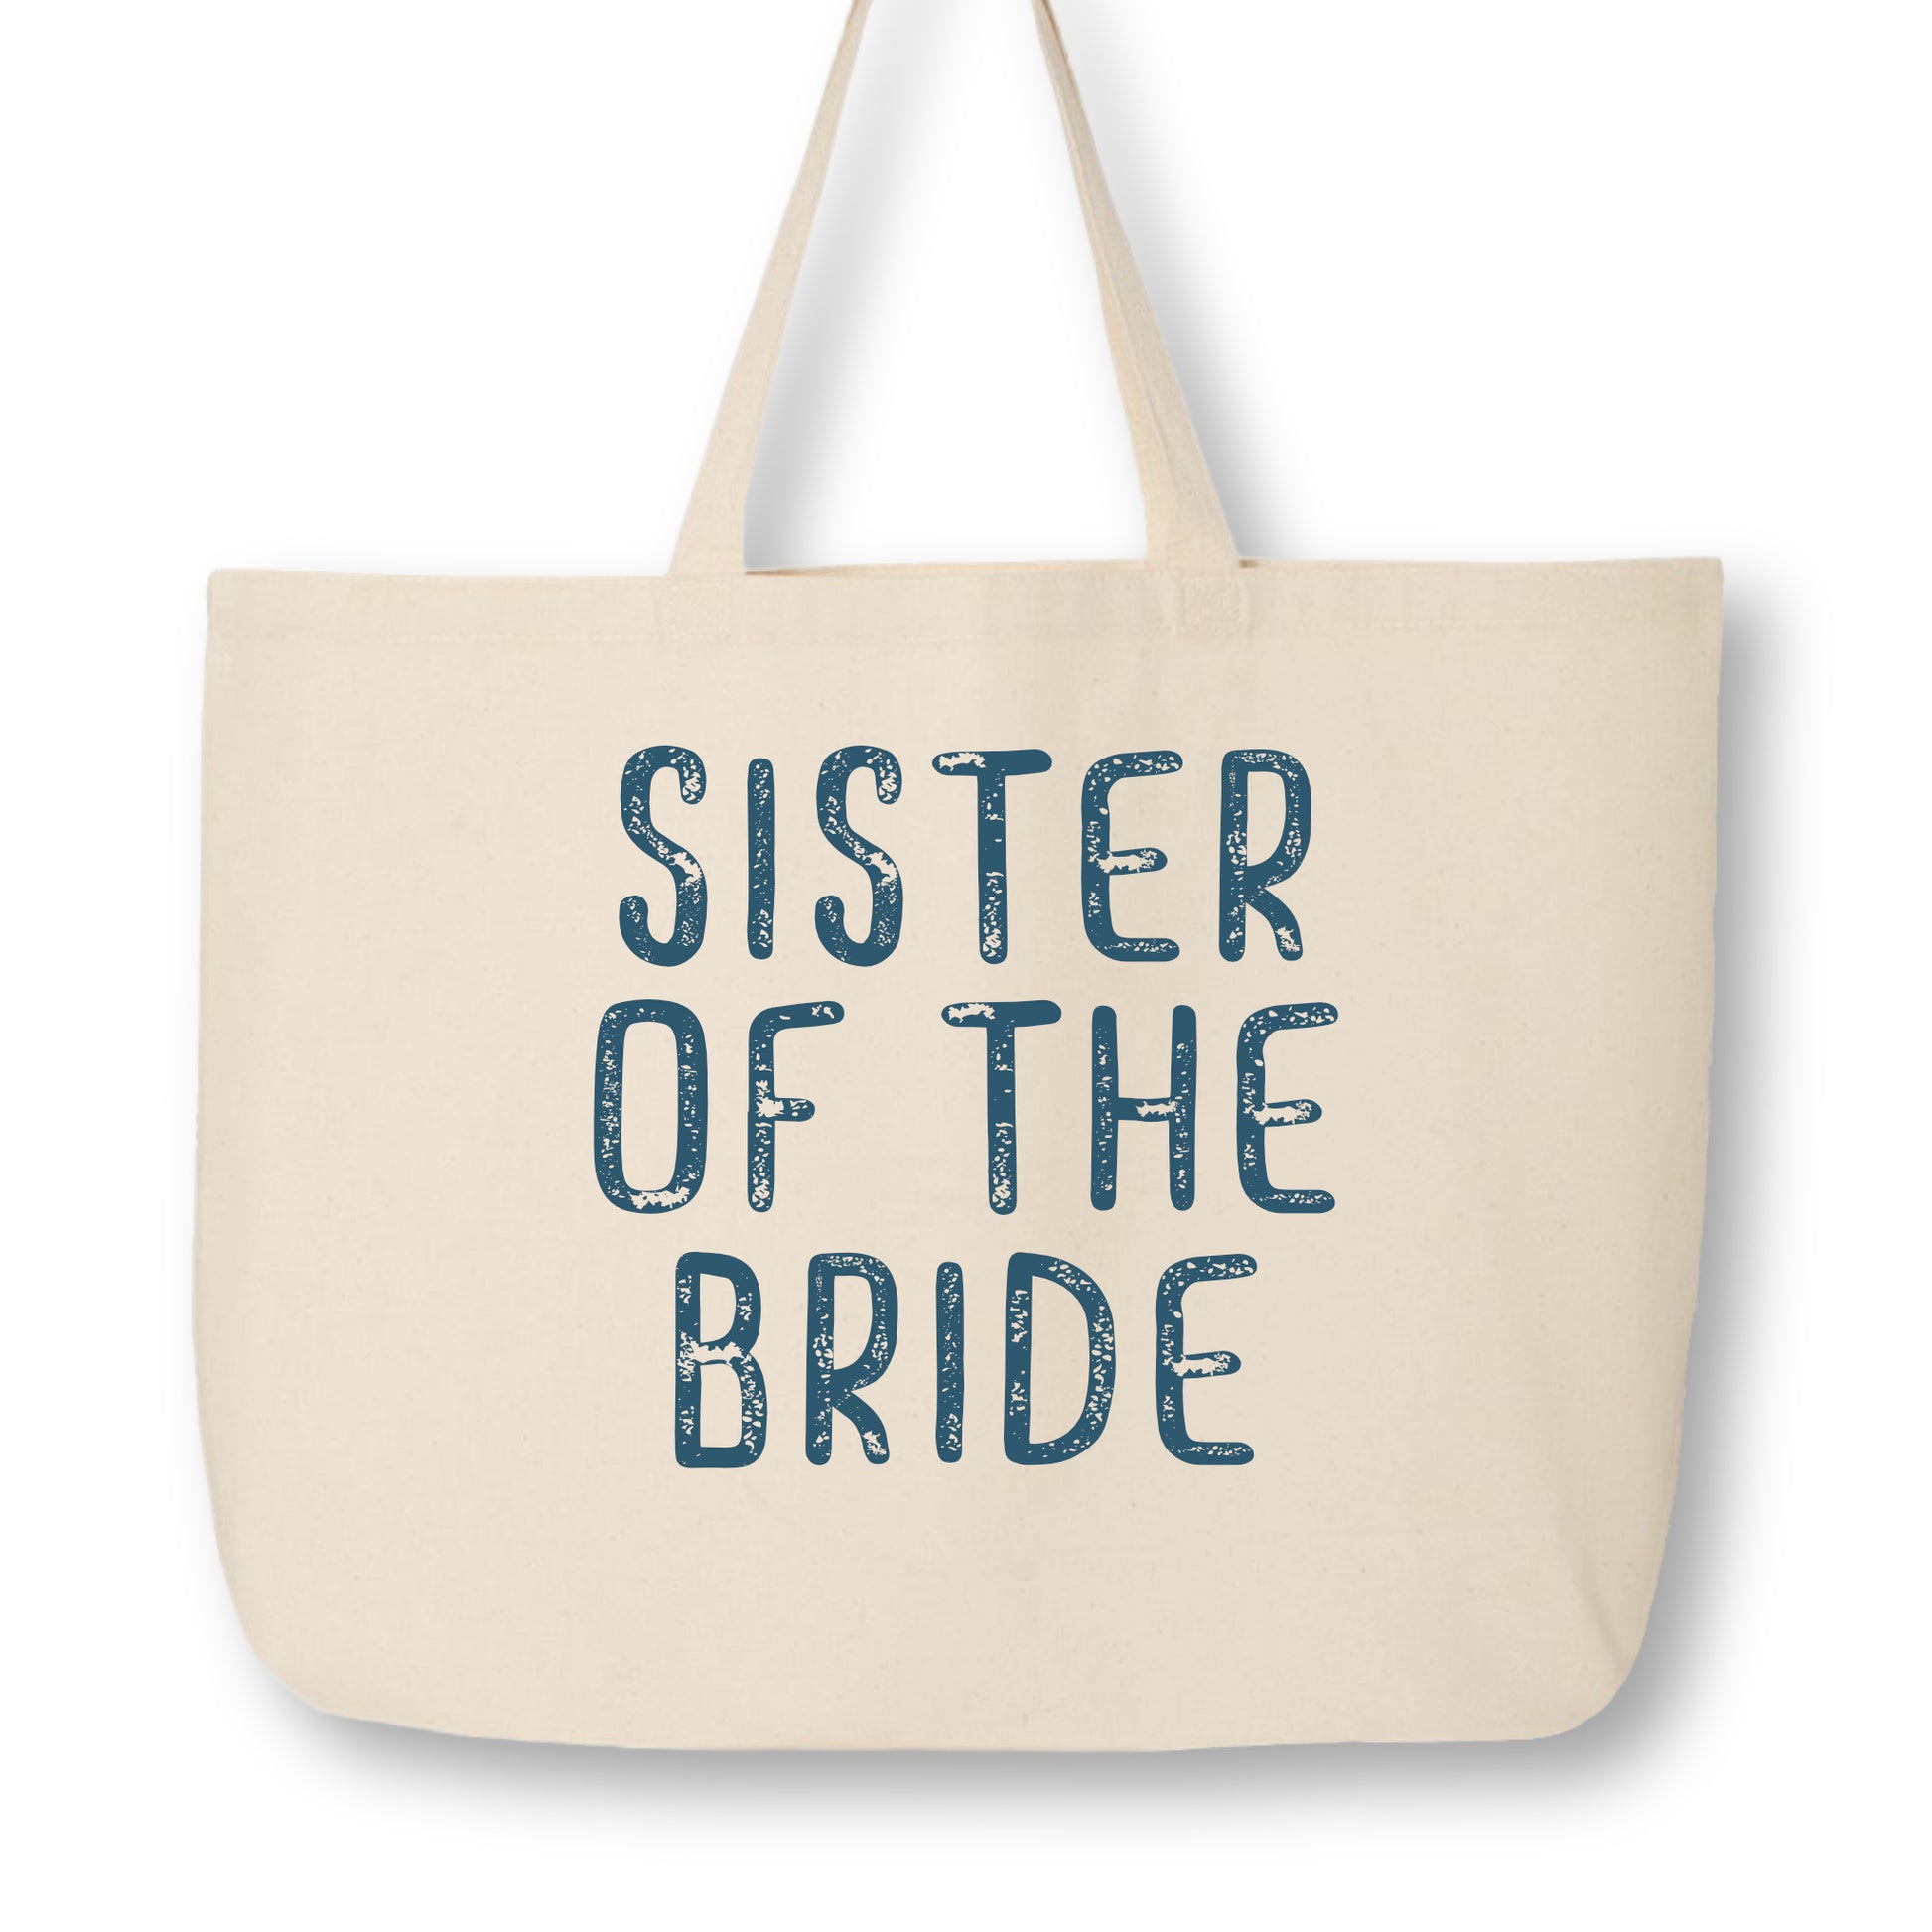 Bridesmaid Gift, Cute Canvas Tote Bag, Fabric Shoulder Bag, Wedding